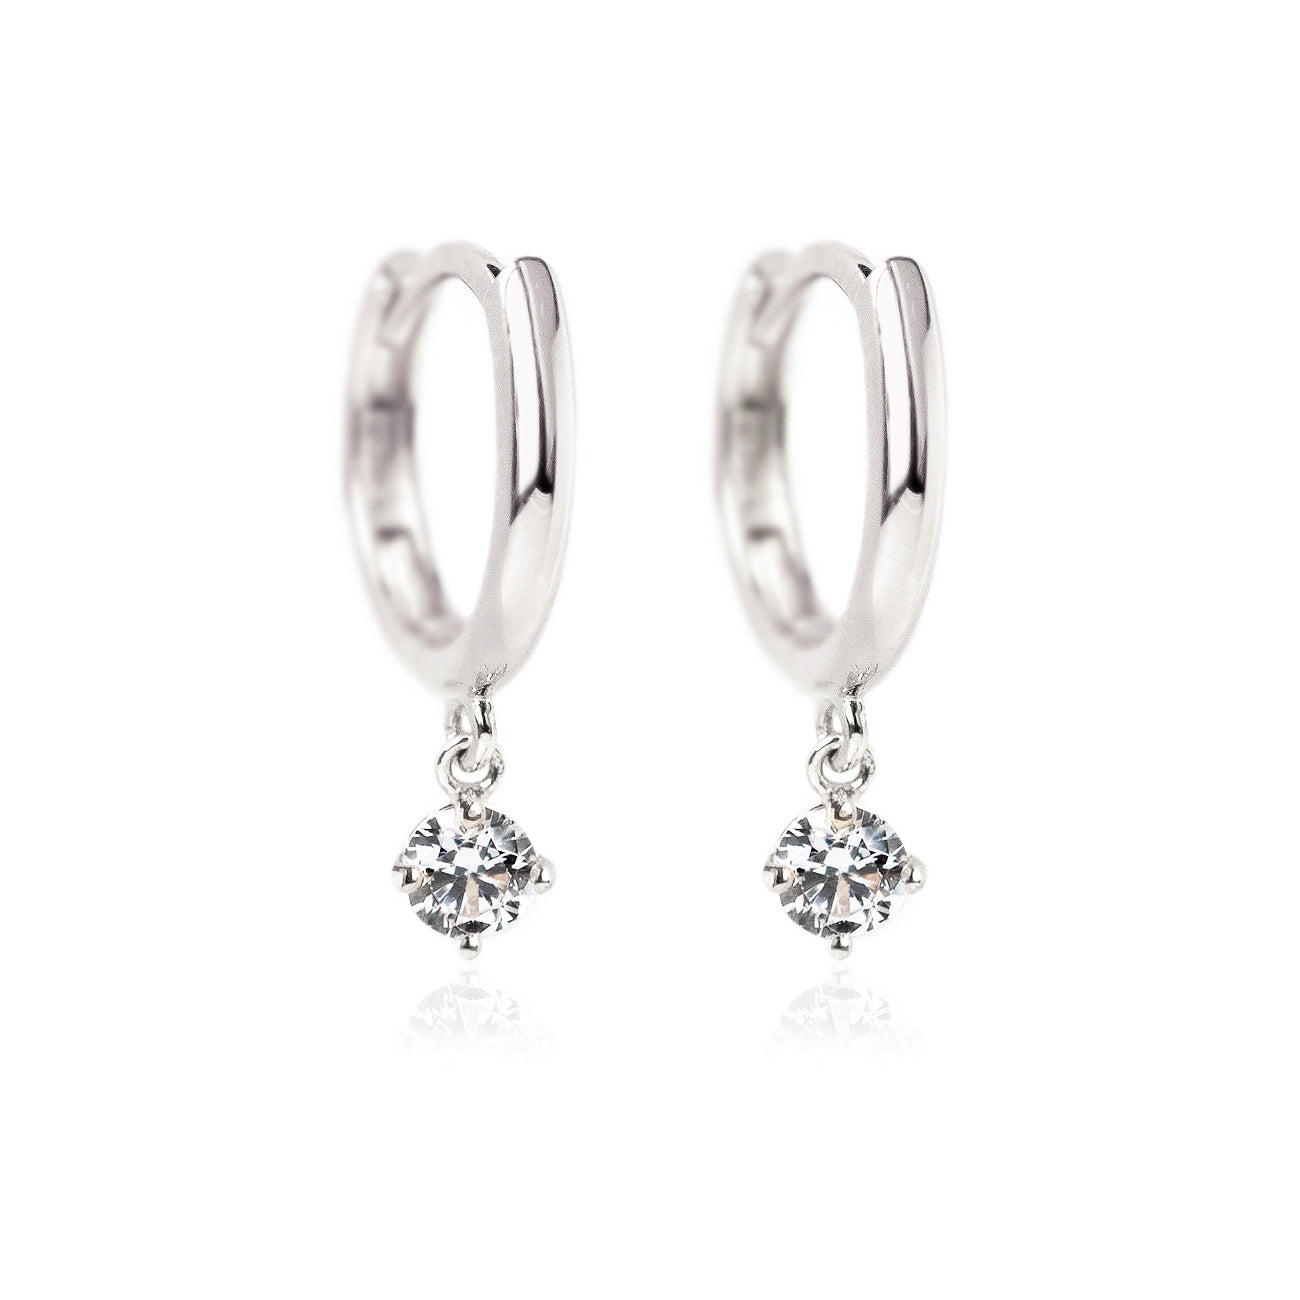 1 Carat Great Value Diamond Stud Earrings - The Jewelry Exchange